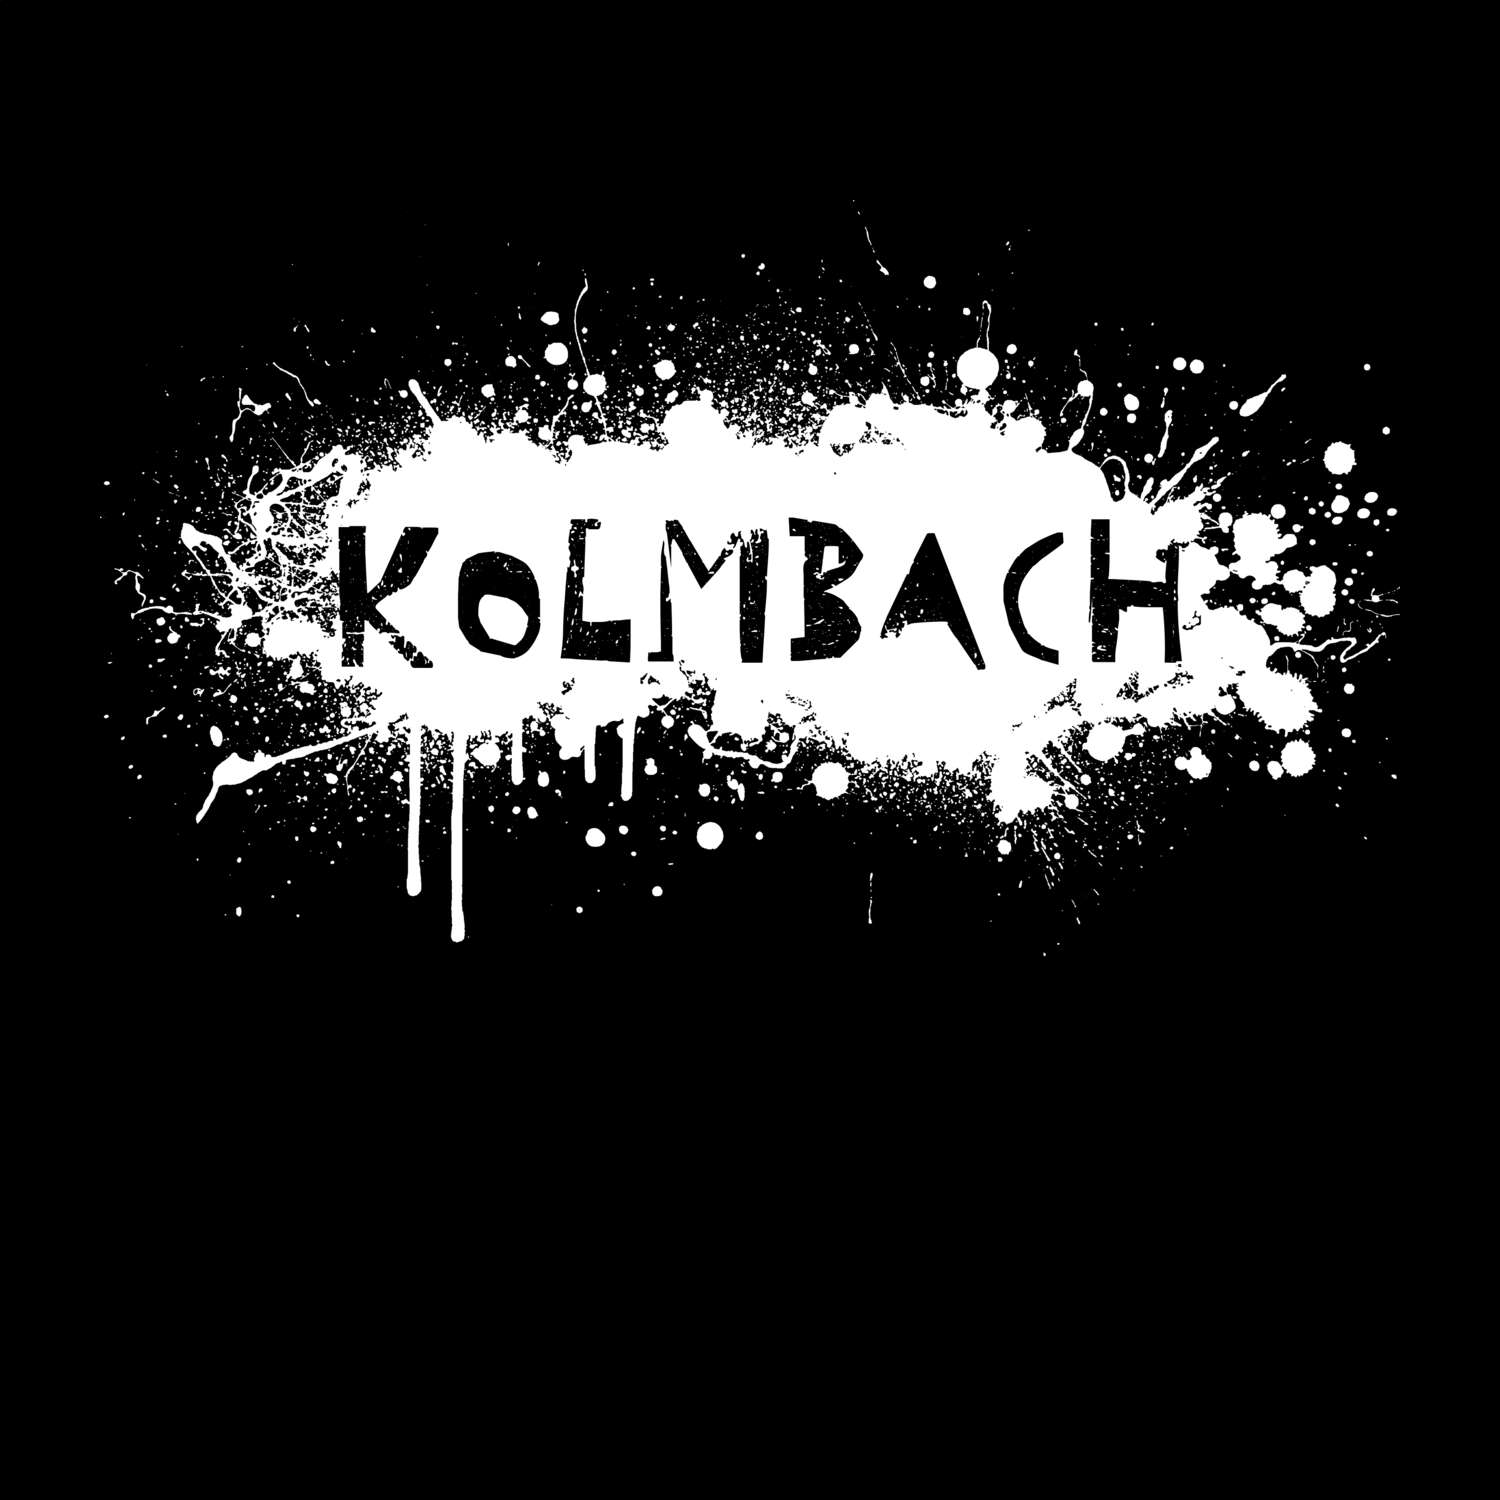 Kolmbach T-Shirt »Paint Splash Punk«